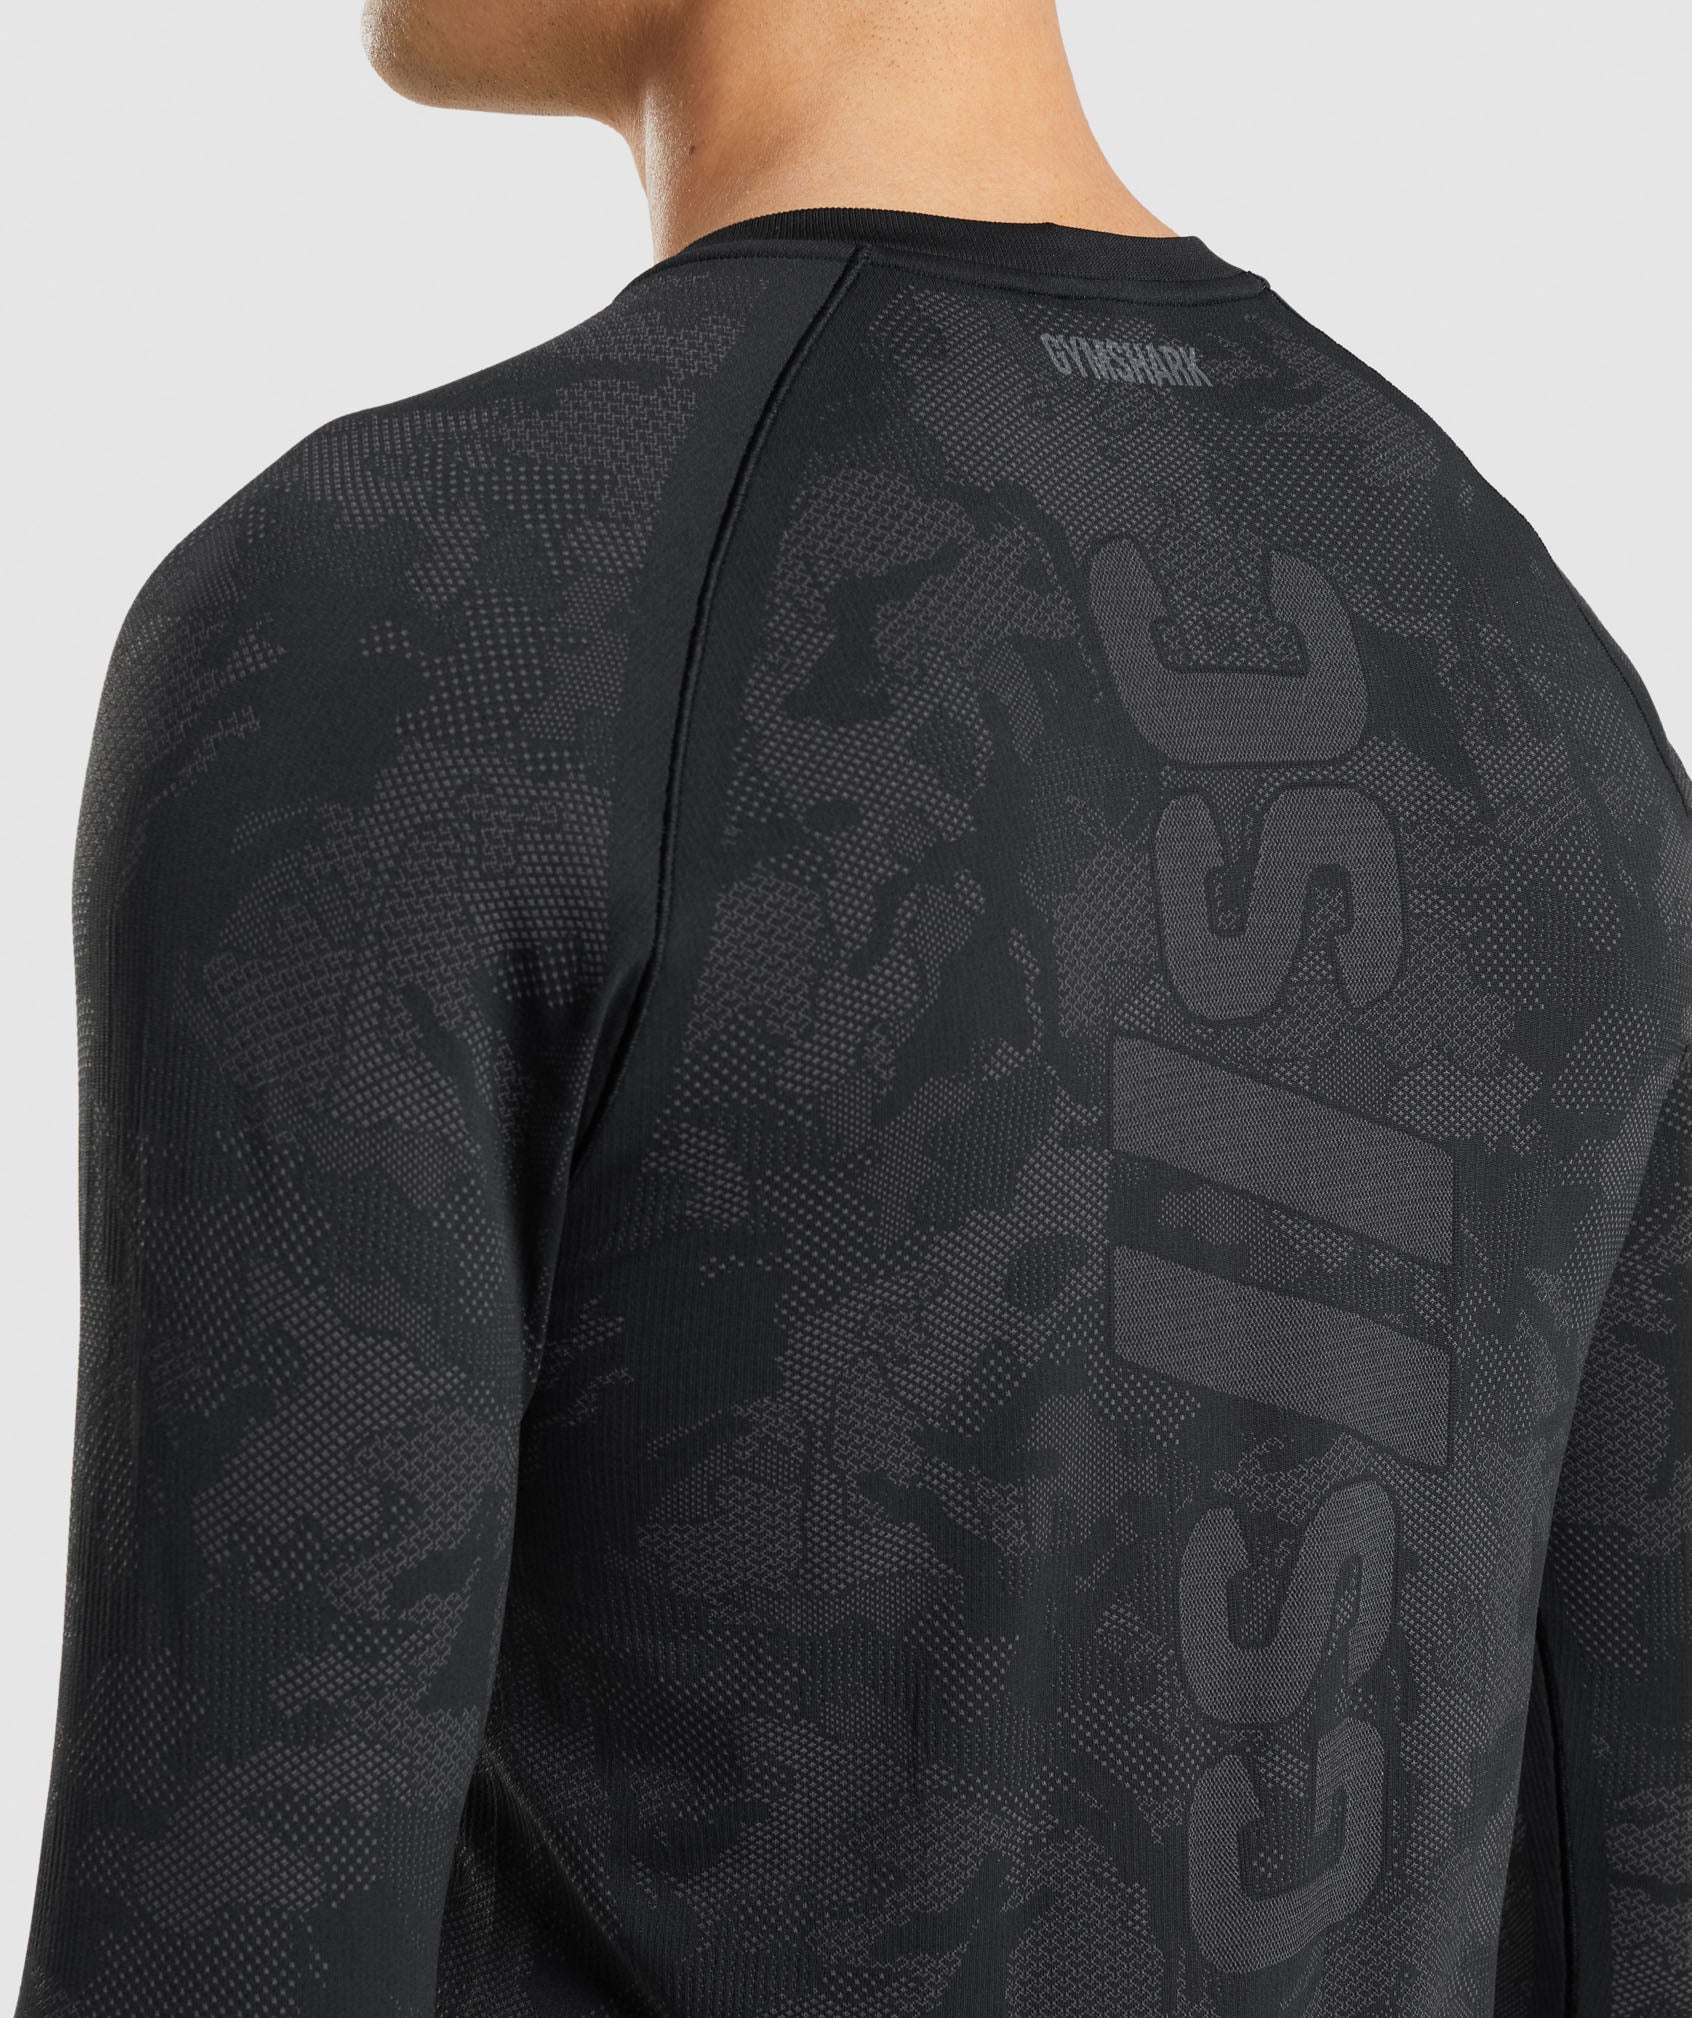 Gymshark//Steve Cook Long Sleeve Seamless T-Shirt in Black/Graphite Grey - view 7